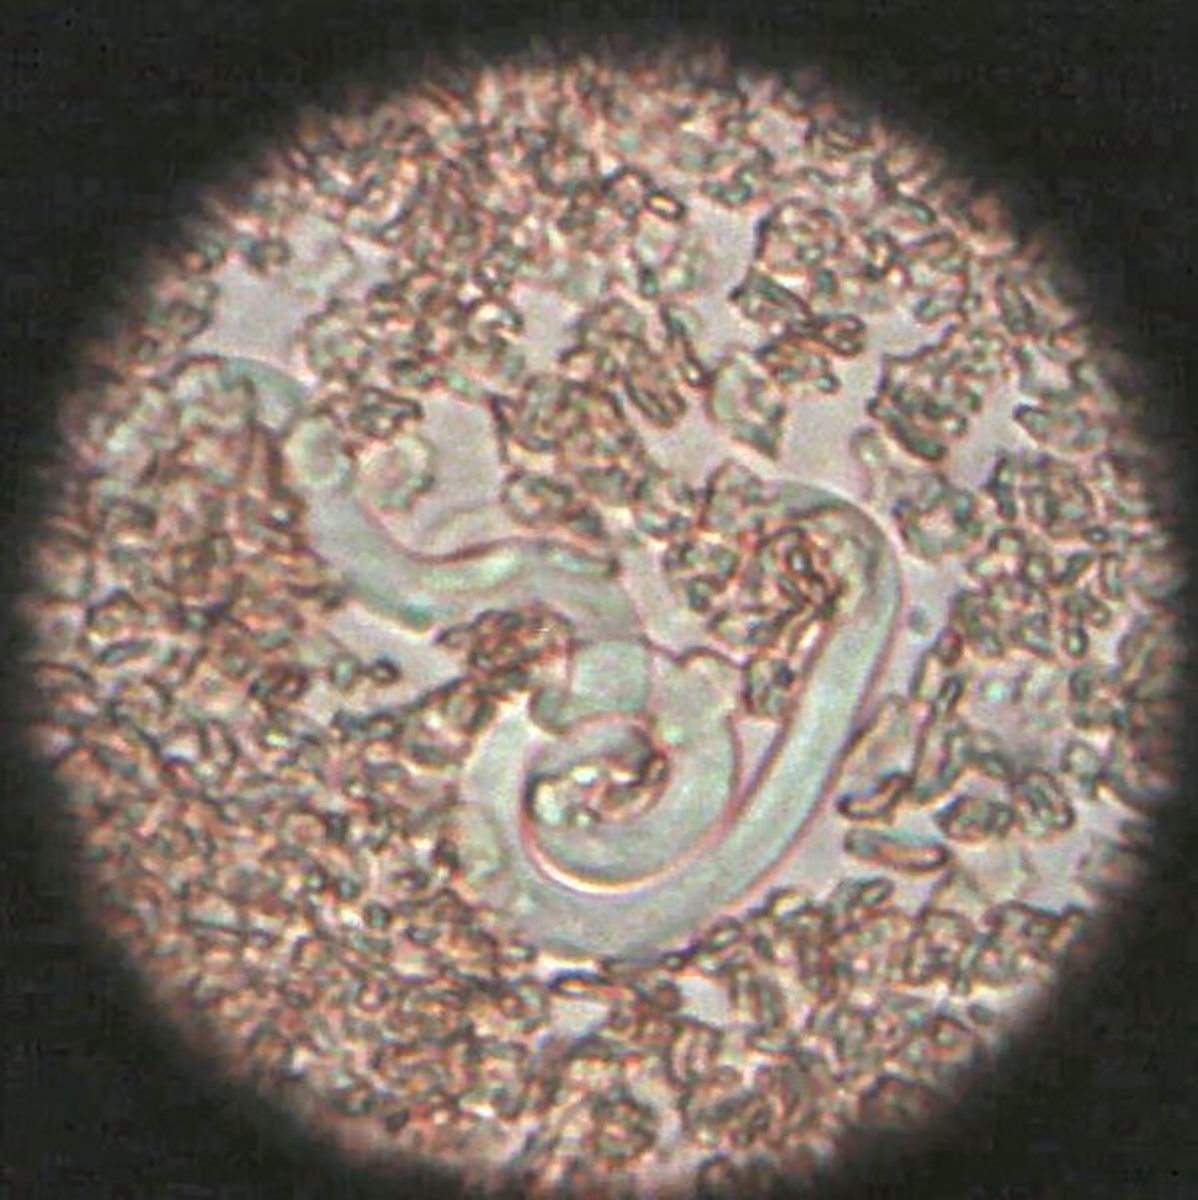 Dirofilaria immitis, or heartworm, under a microscope